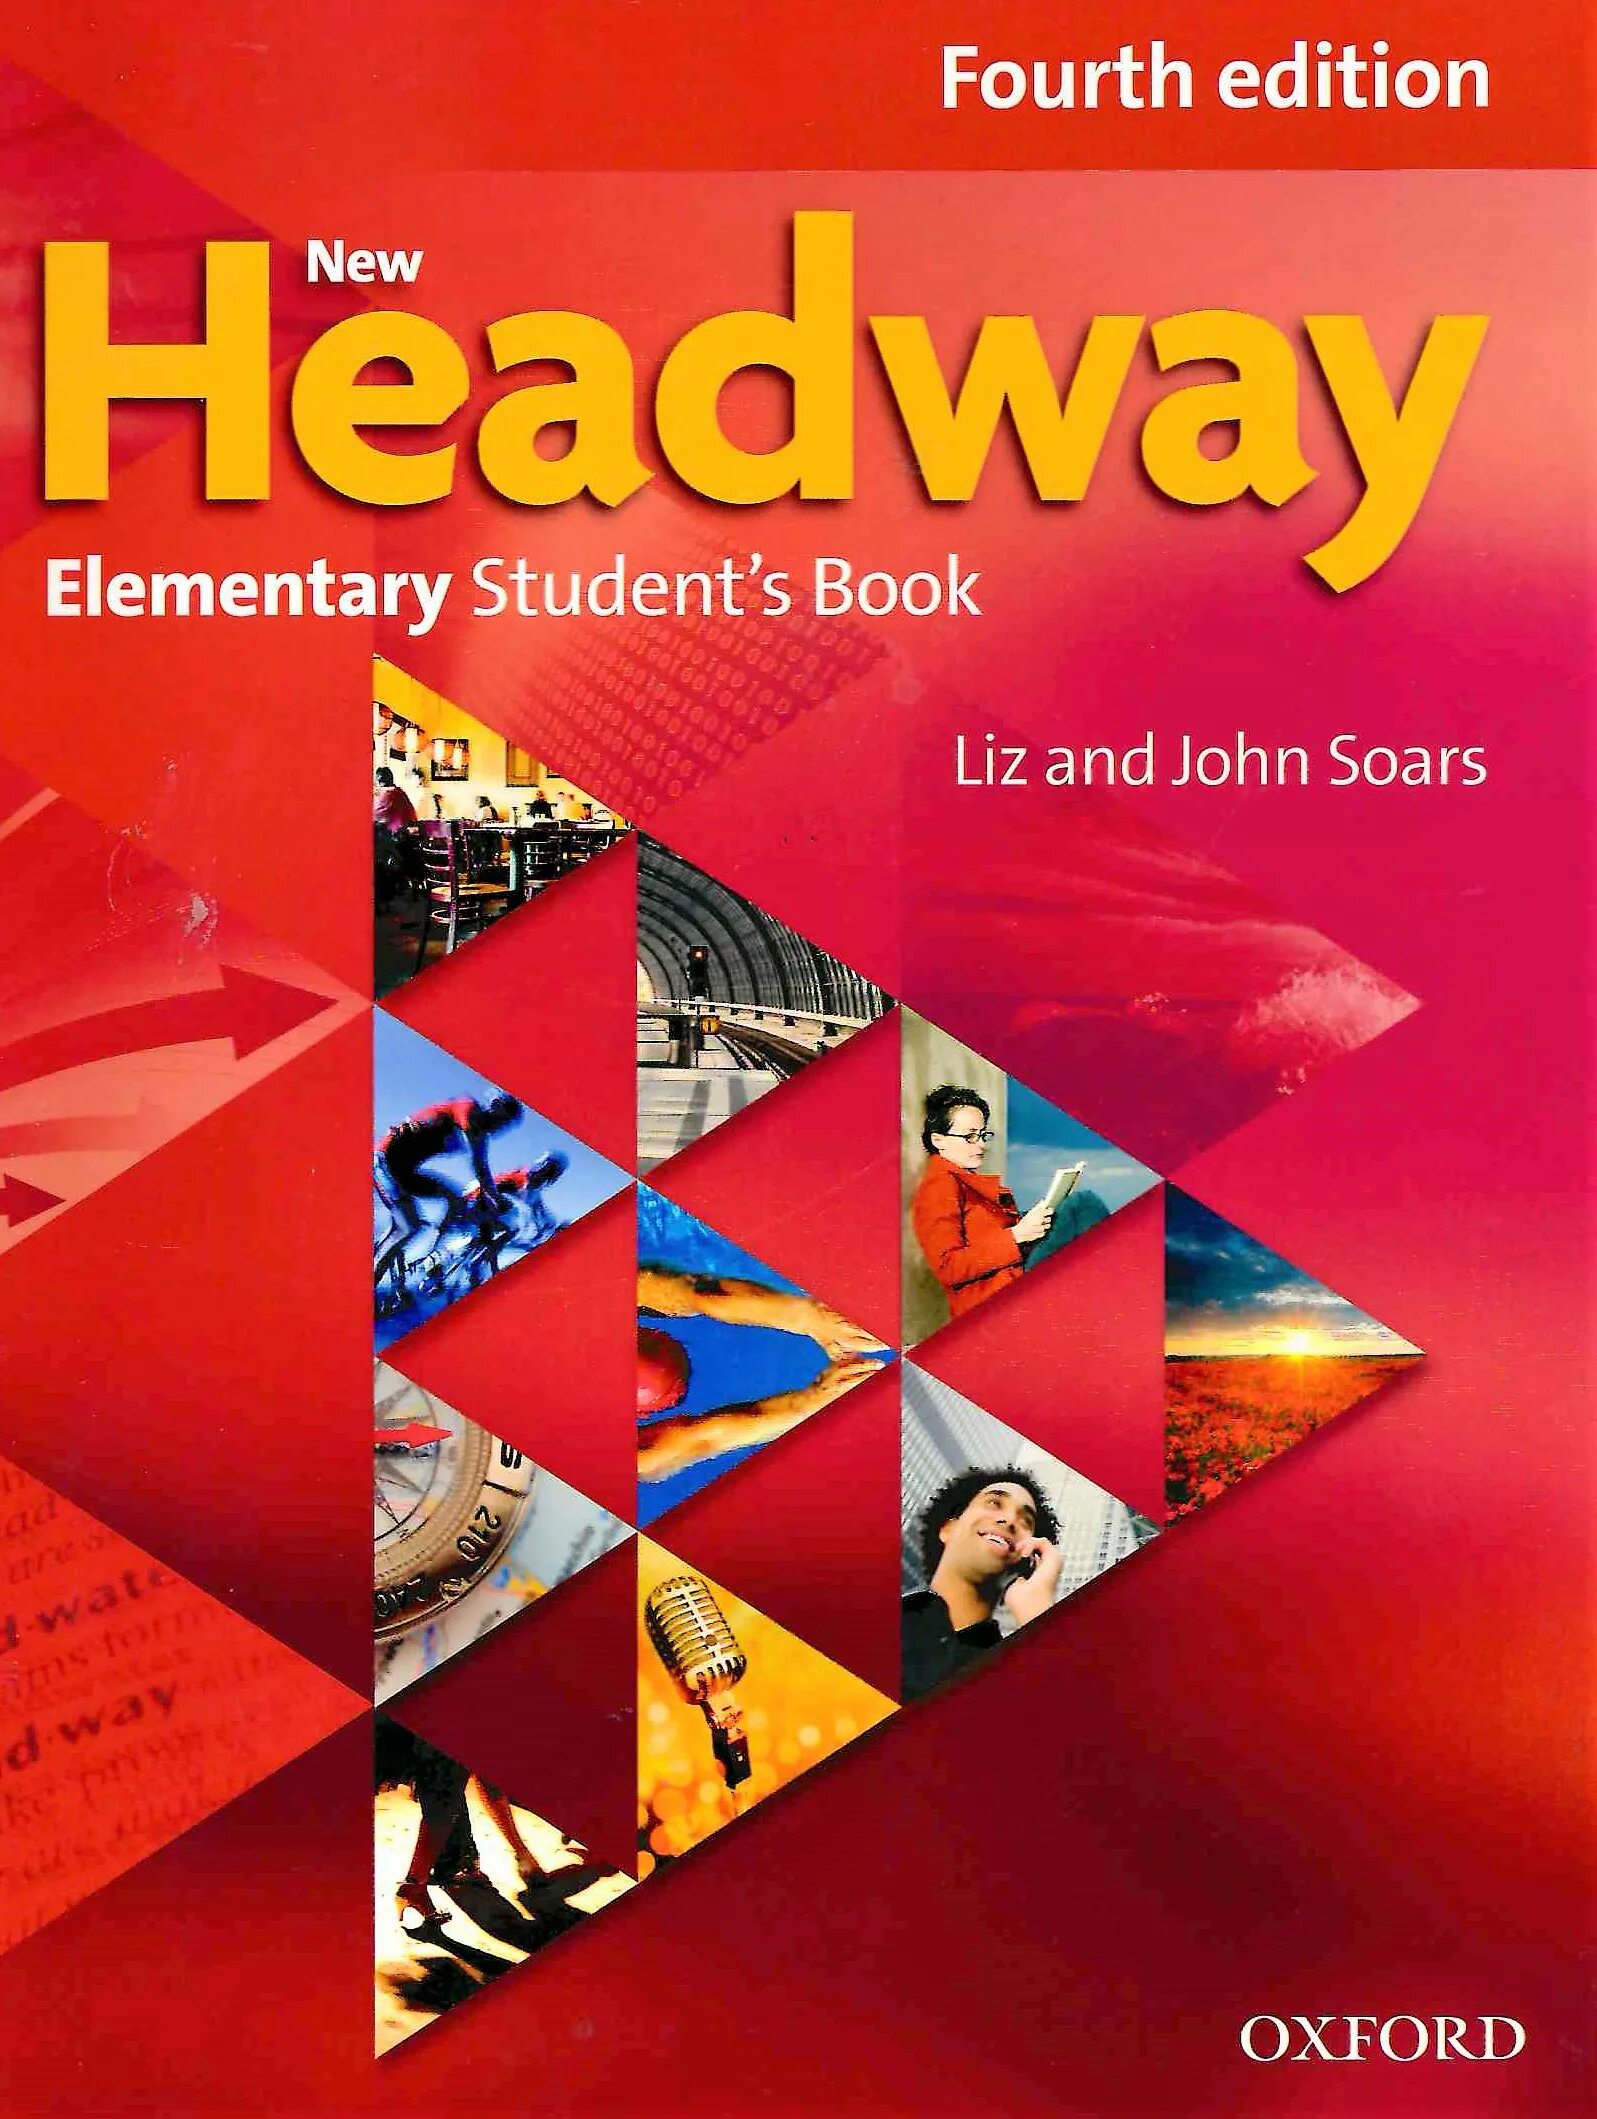 Pdf student books elementary. New Headway Elementary 3rd Edition. New Headway Beginner 4th Edition. New Headway Elementary Audio 4th Edition. New Headway Elementary 4th Edition.